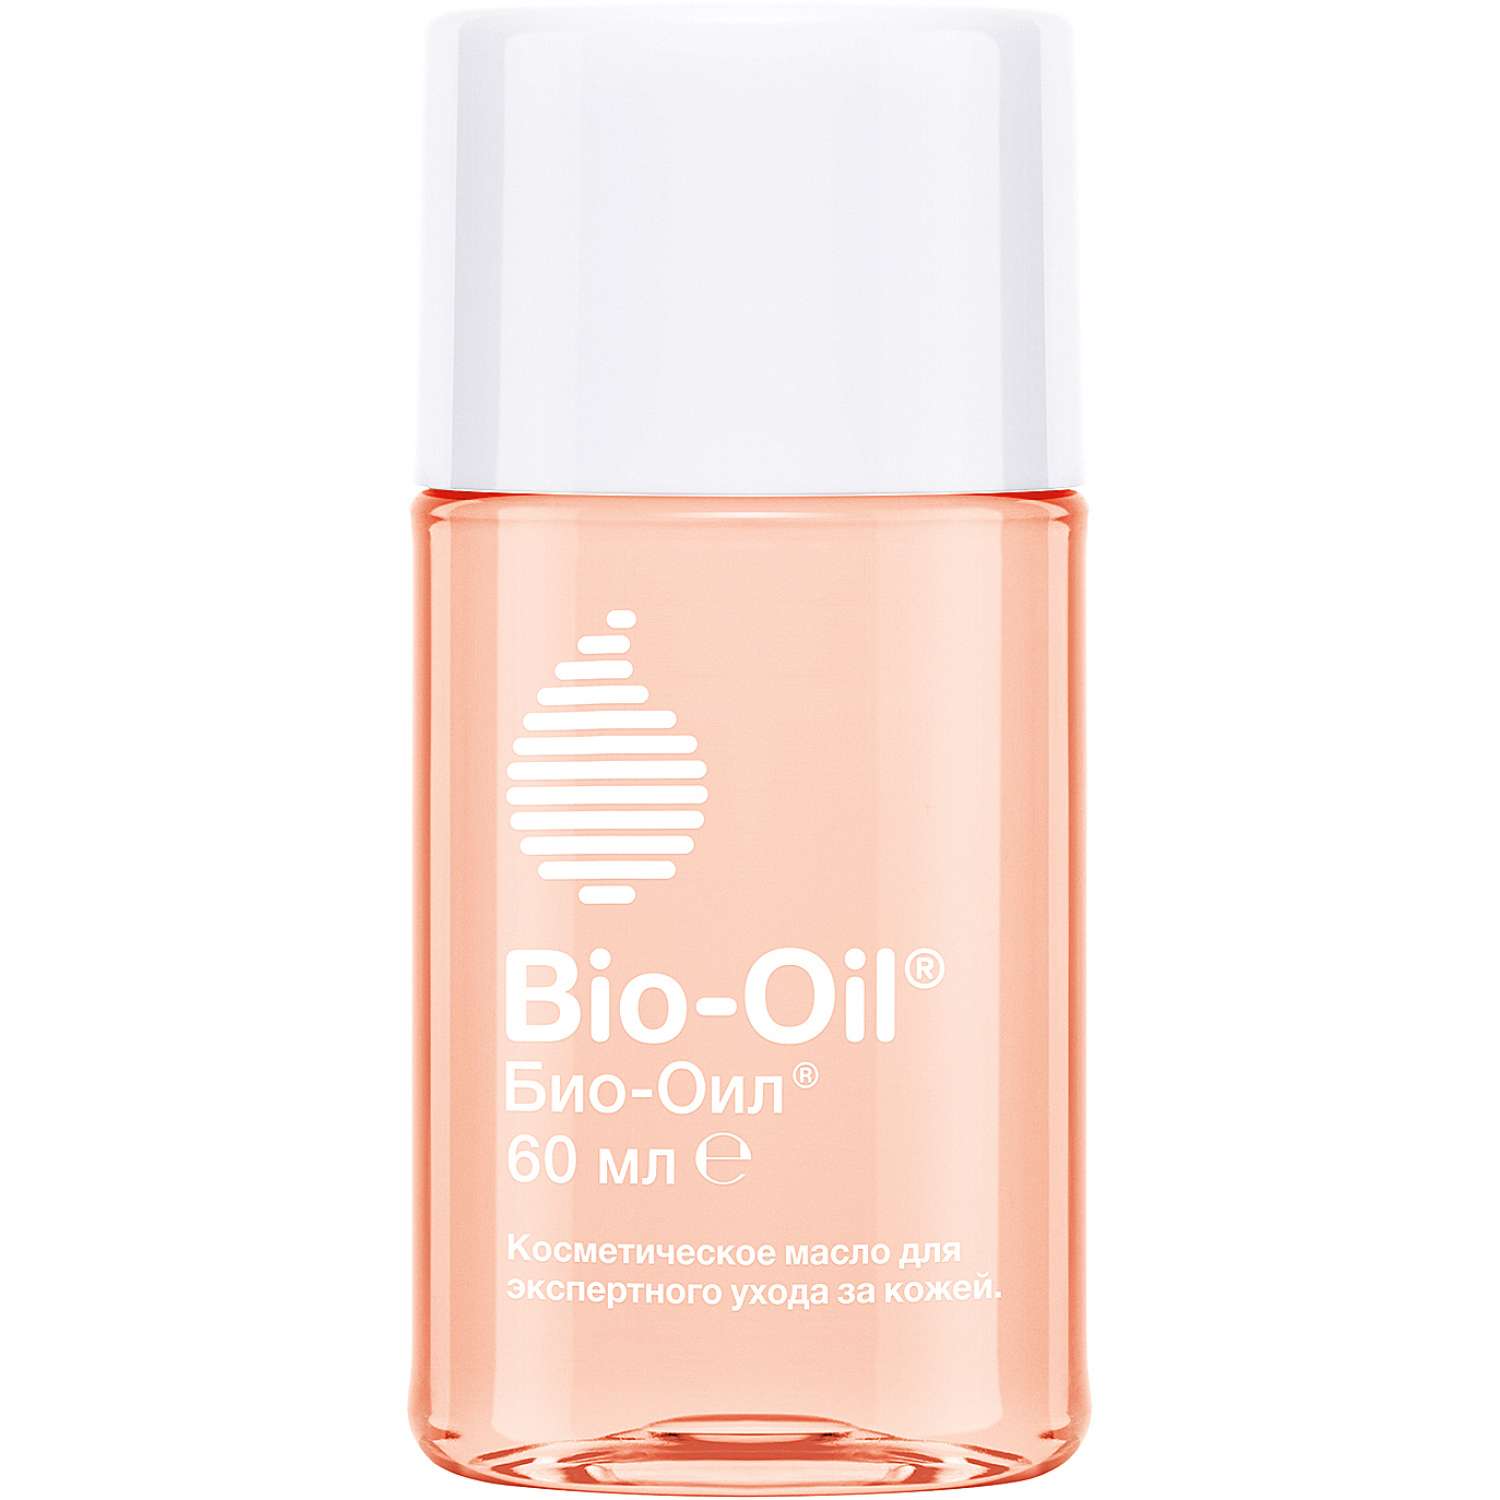 Масло Bio-Oil косметическое - фото 1